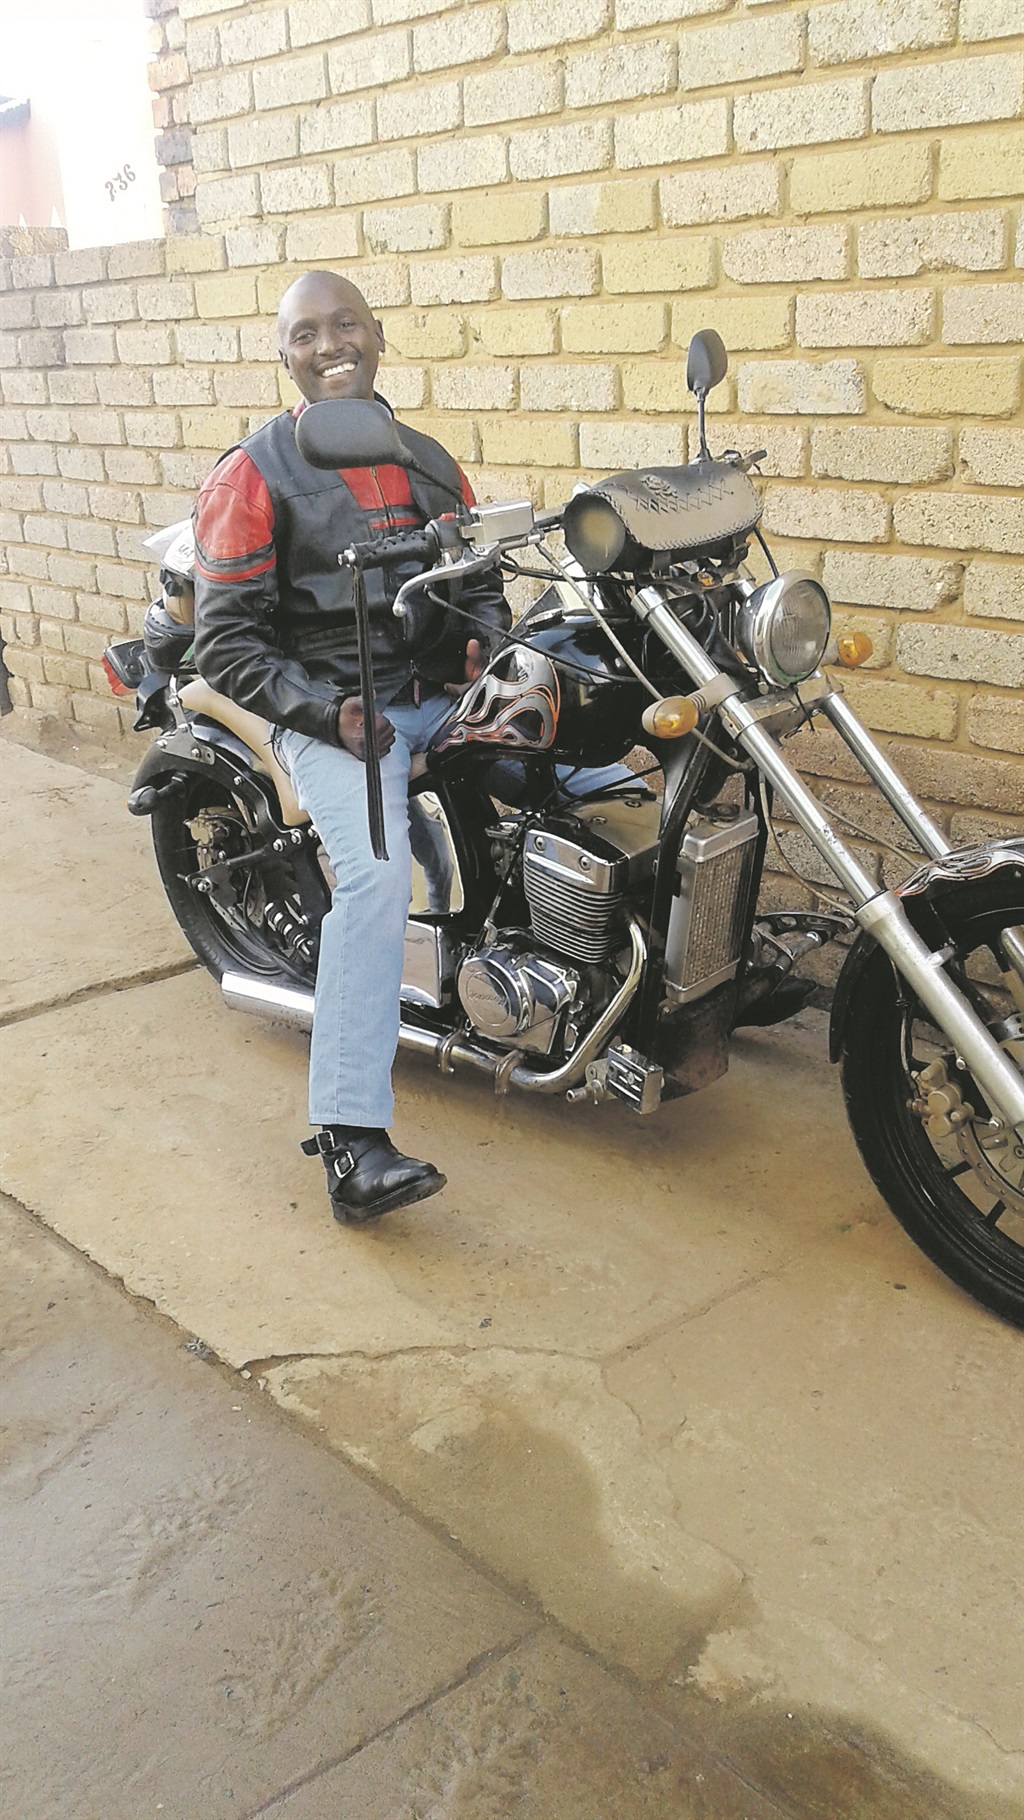 Mandla Zililo from Sebokeng loves cruising Mzansi roads on his monster bike.